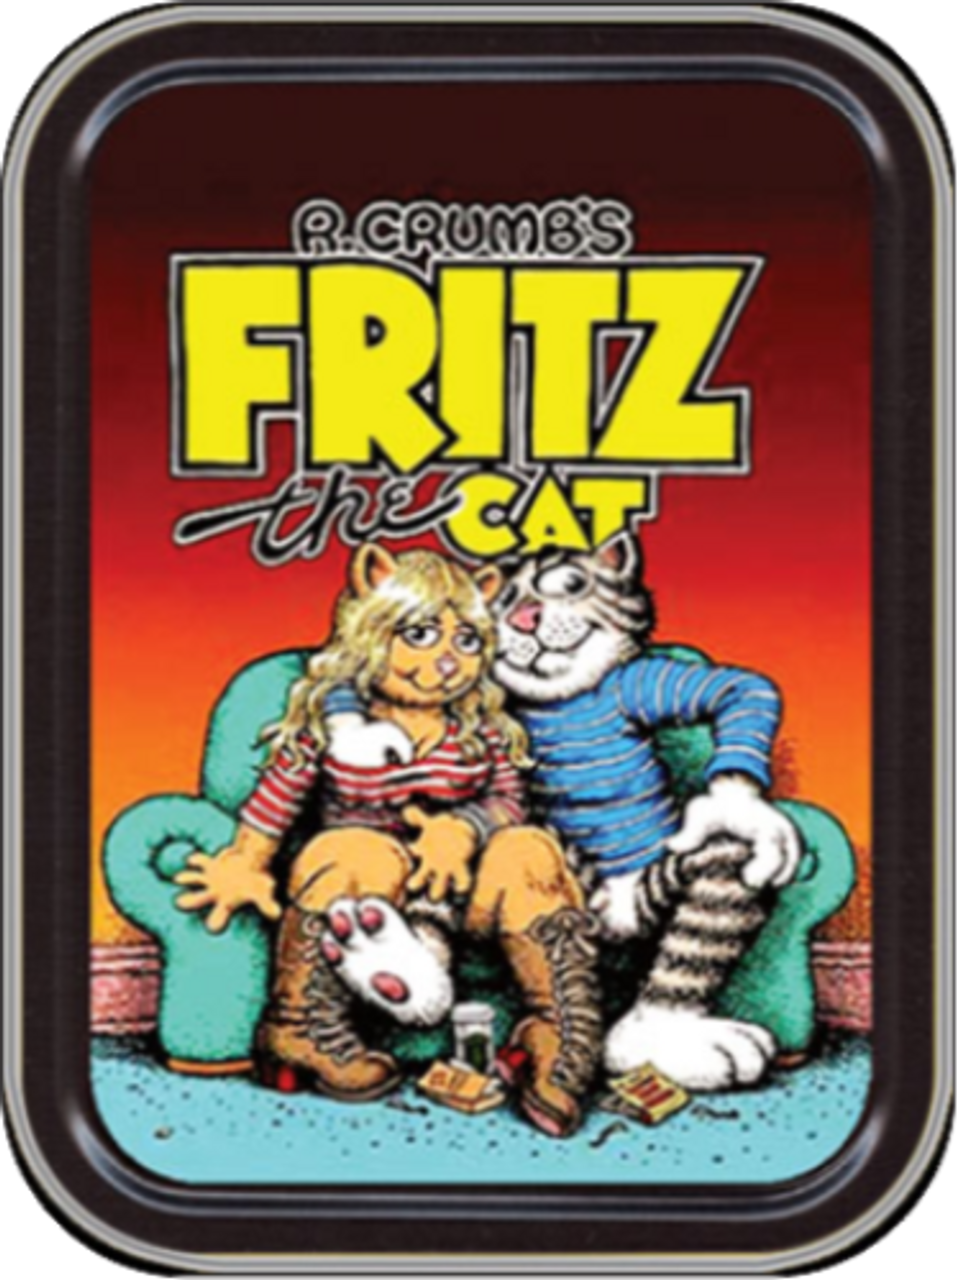 Fritz the Cat - R. Crumb Stash Tin Storage Container 4.37 L x 3.5